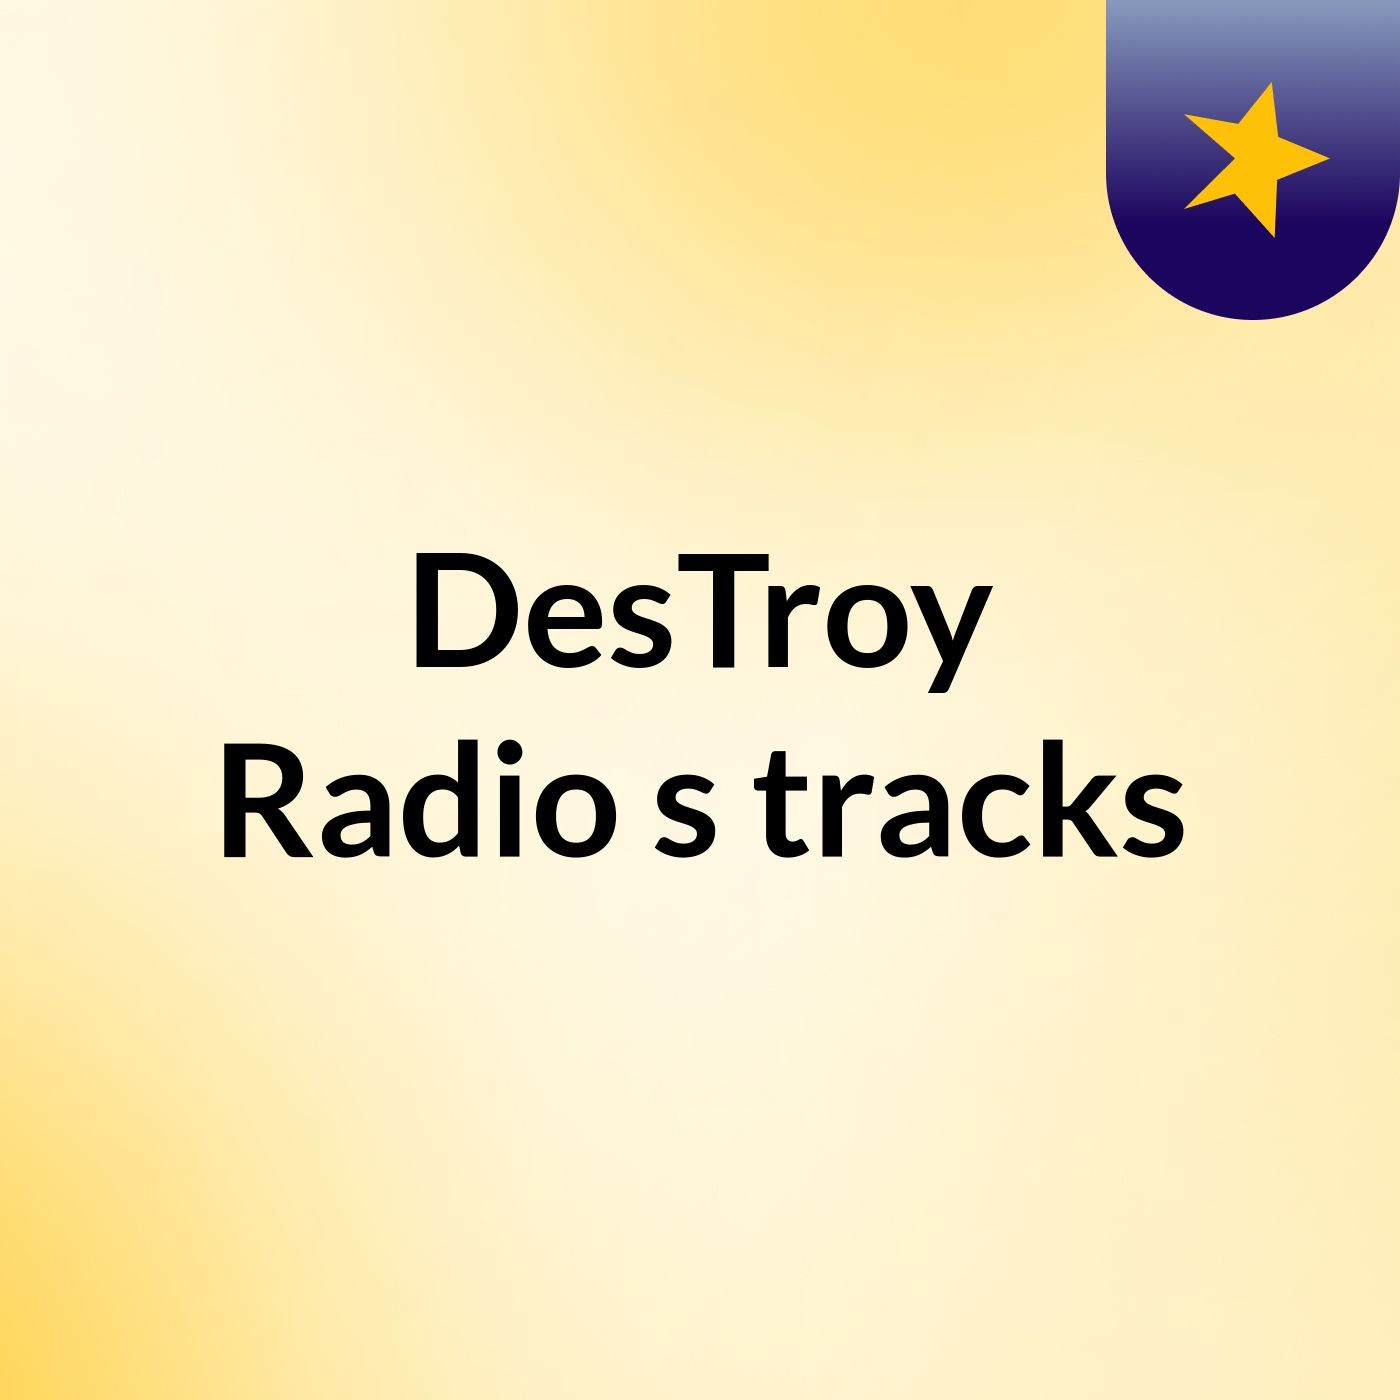 DesTroy Radio's tracks